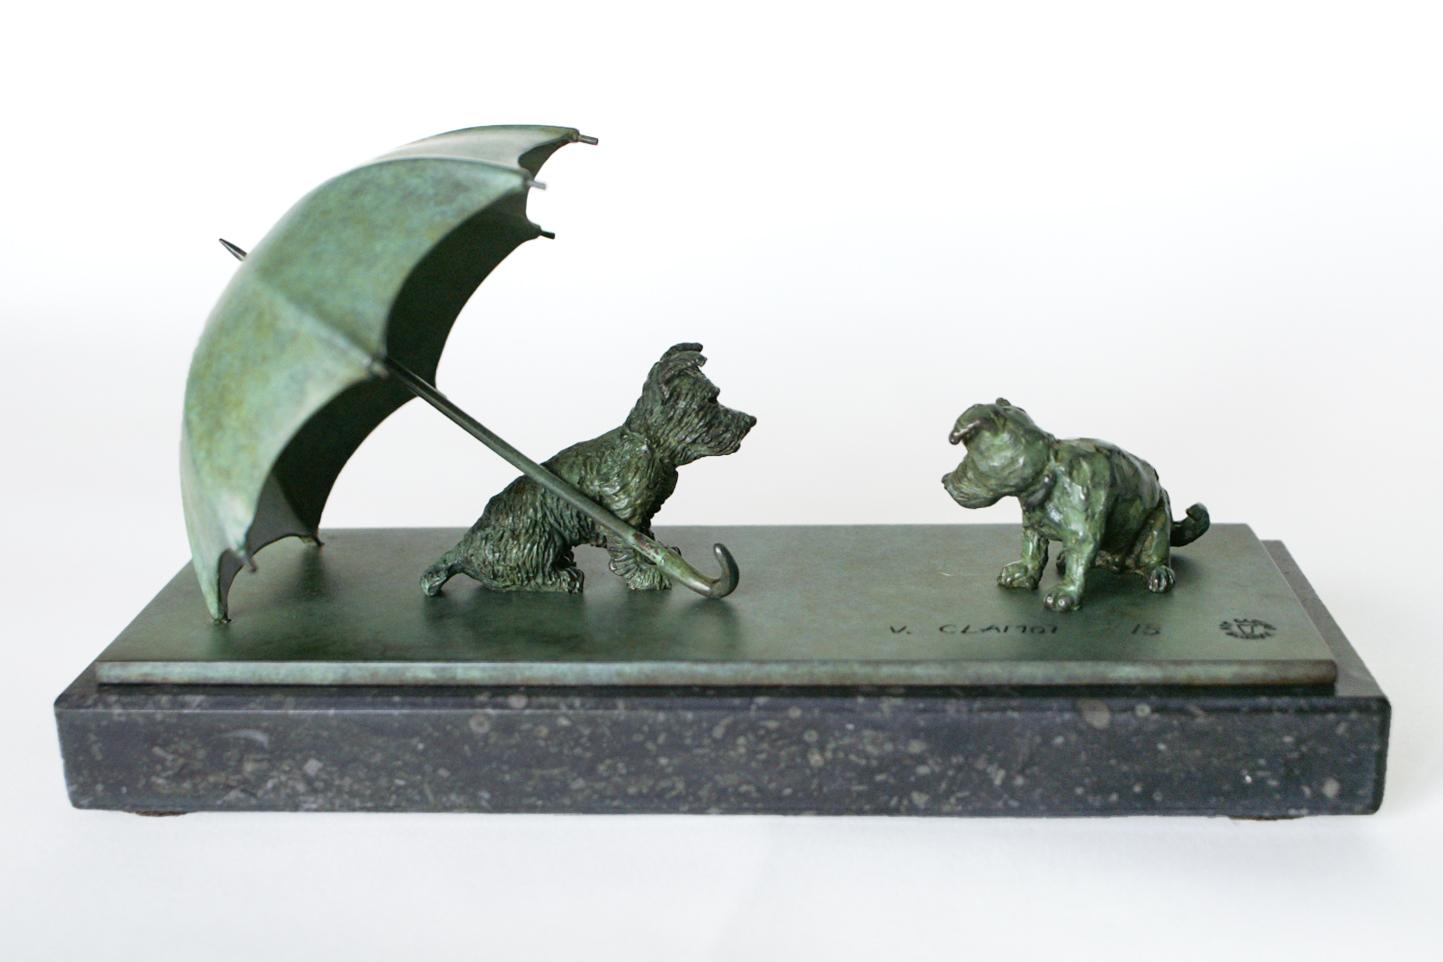 Veronique Clamot Figurative Sculpture - On se Connait Bronze Sculpture Dogs Umbrella Green Patina Contemporary In Stock 